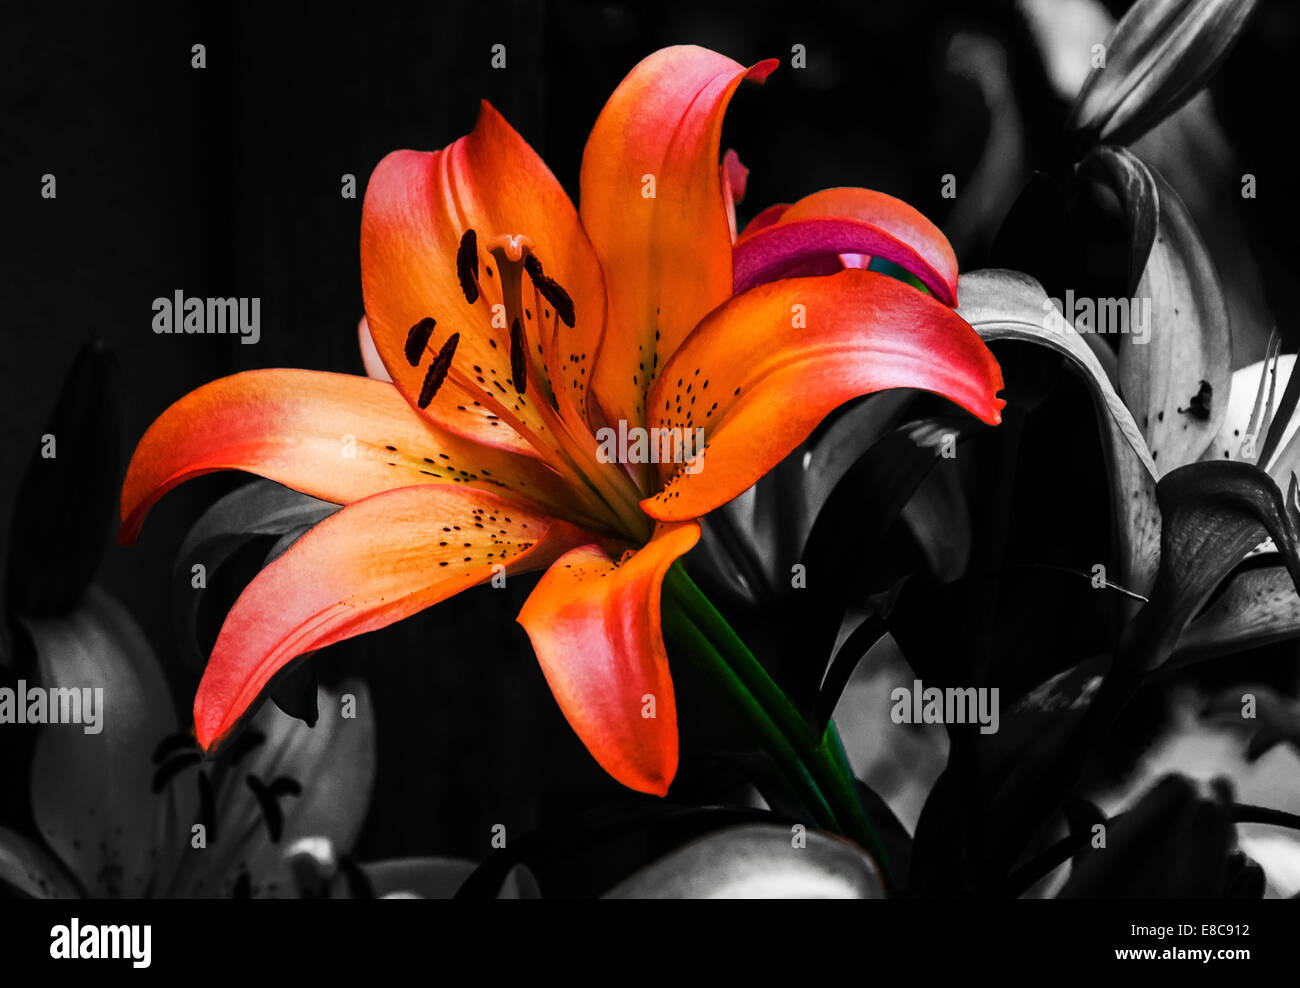 Selektive Farbe Bild von Lilien. Stockfoto